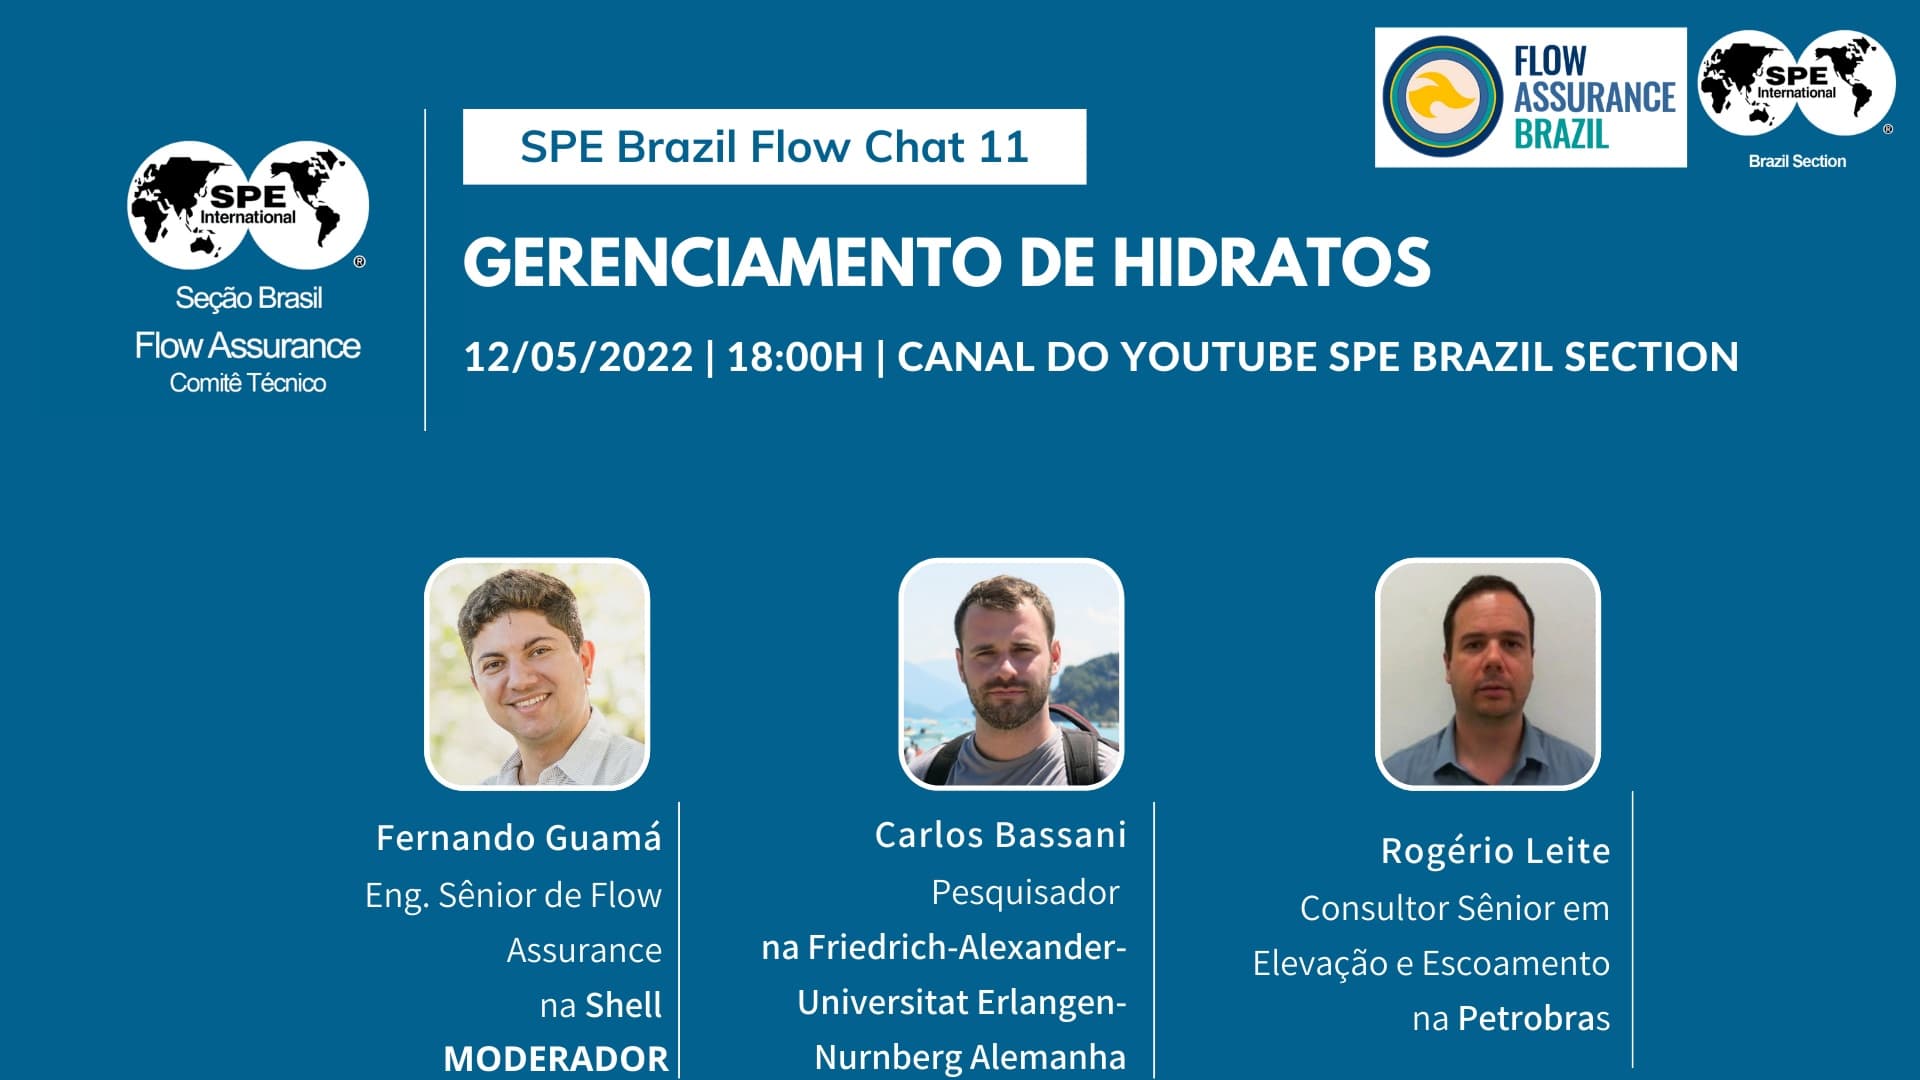 SPE Brasil Flow Chat 11: “Gerenciamento de Hidratos”  